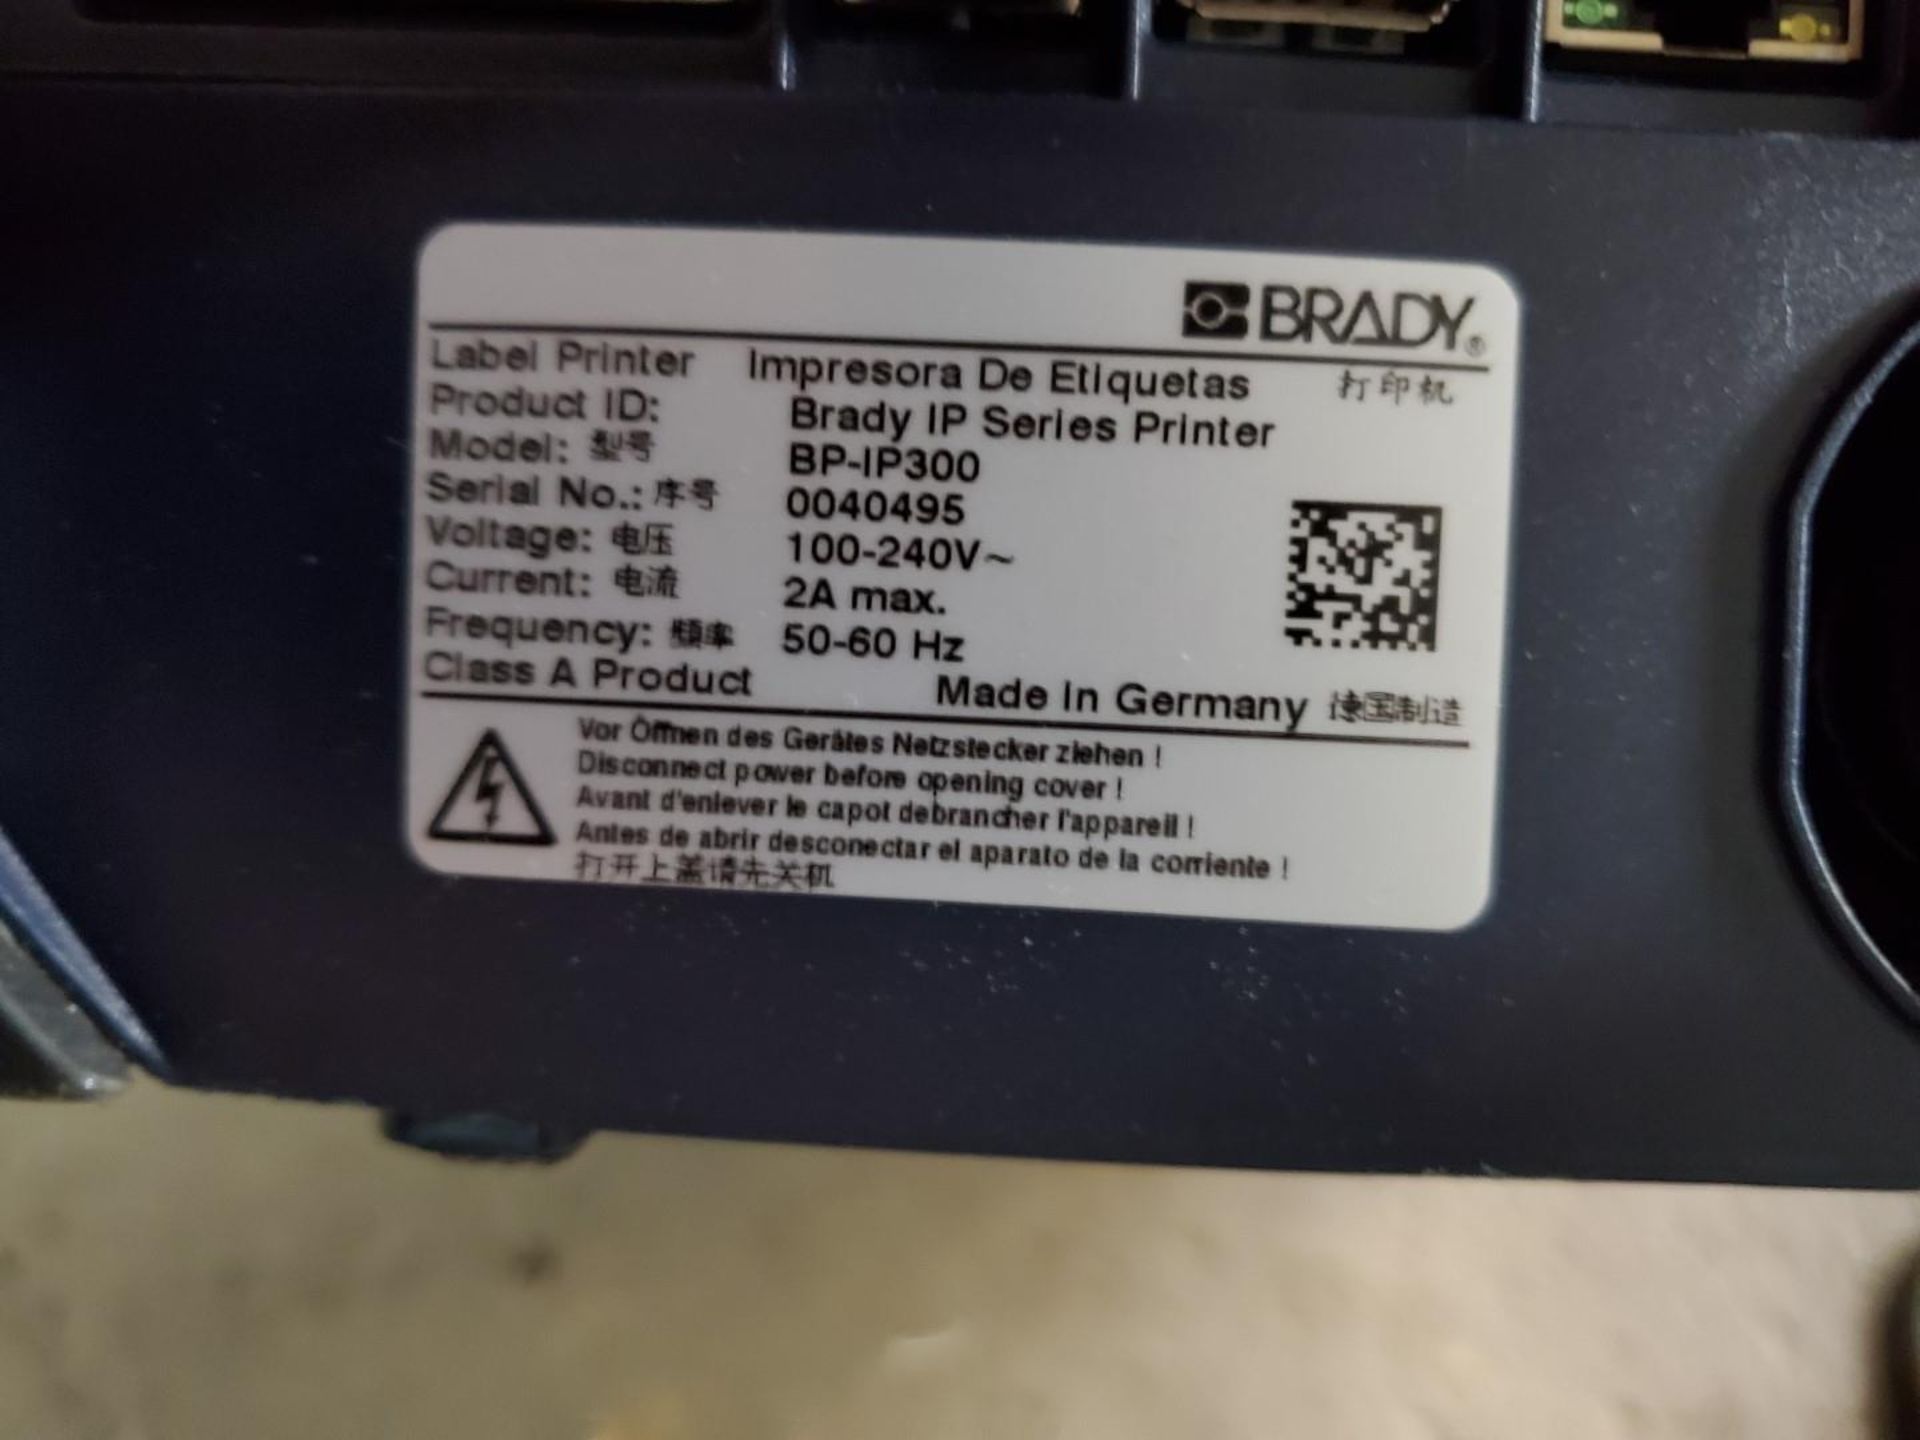 Brady Label Printer, IP series, model PB-IP300, 120 volt - Image 4 of 4